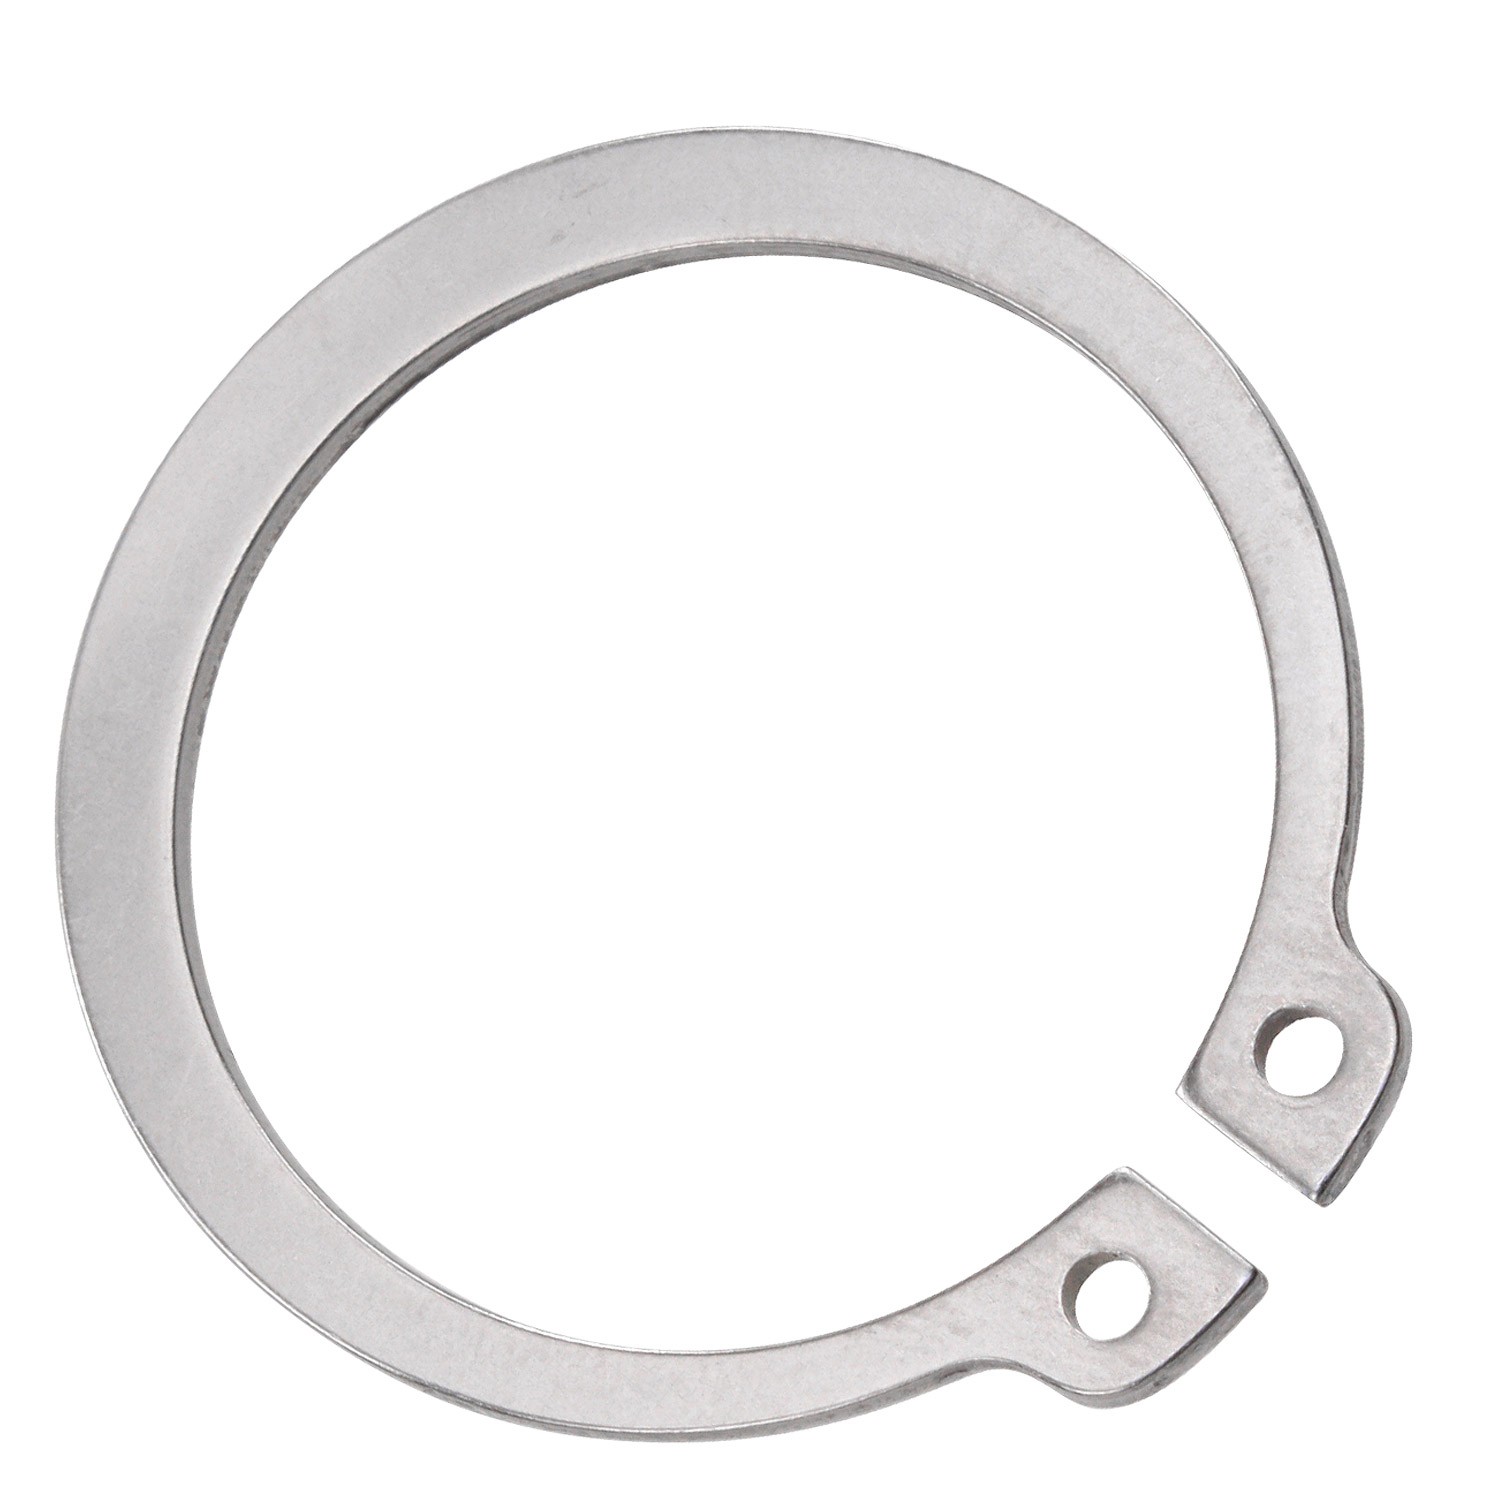 Кольцо стопорное наружное 3х0,4 DIN 471, нержавеющая сталь 1.4122 (А2) - фото